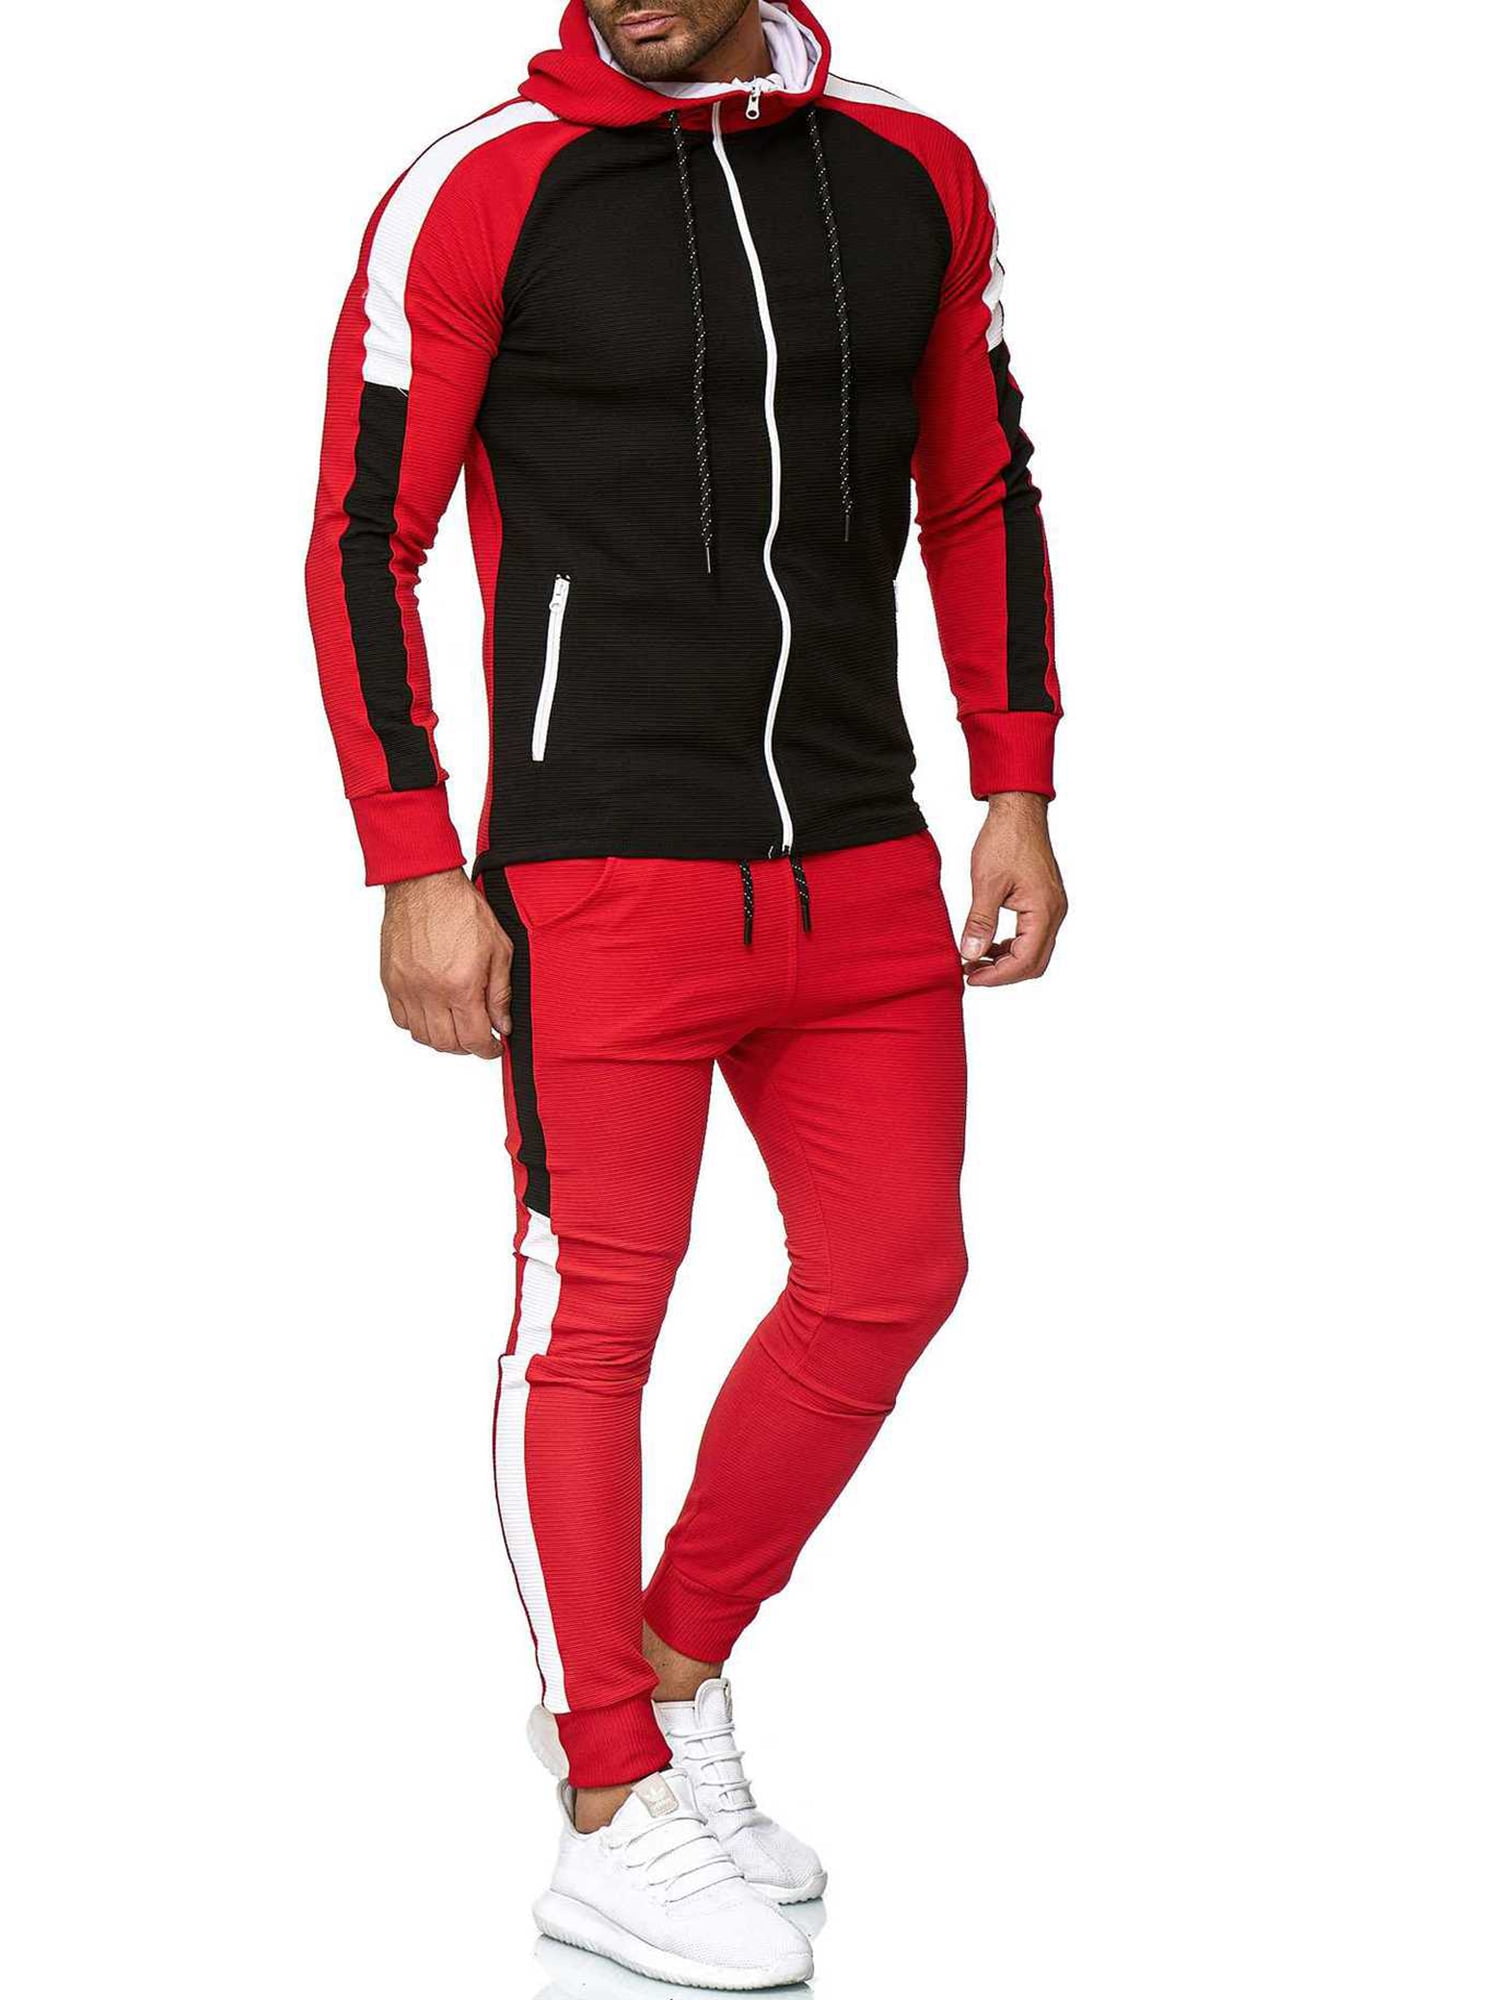 Mens Elastic pants 2 Piece suits Activewear Tracksuit Jogging Atheletic Jackets